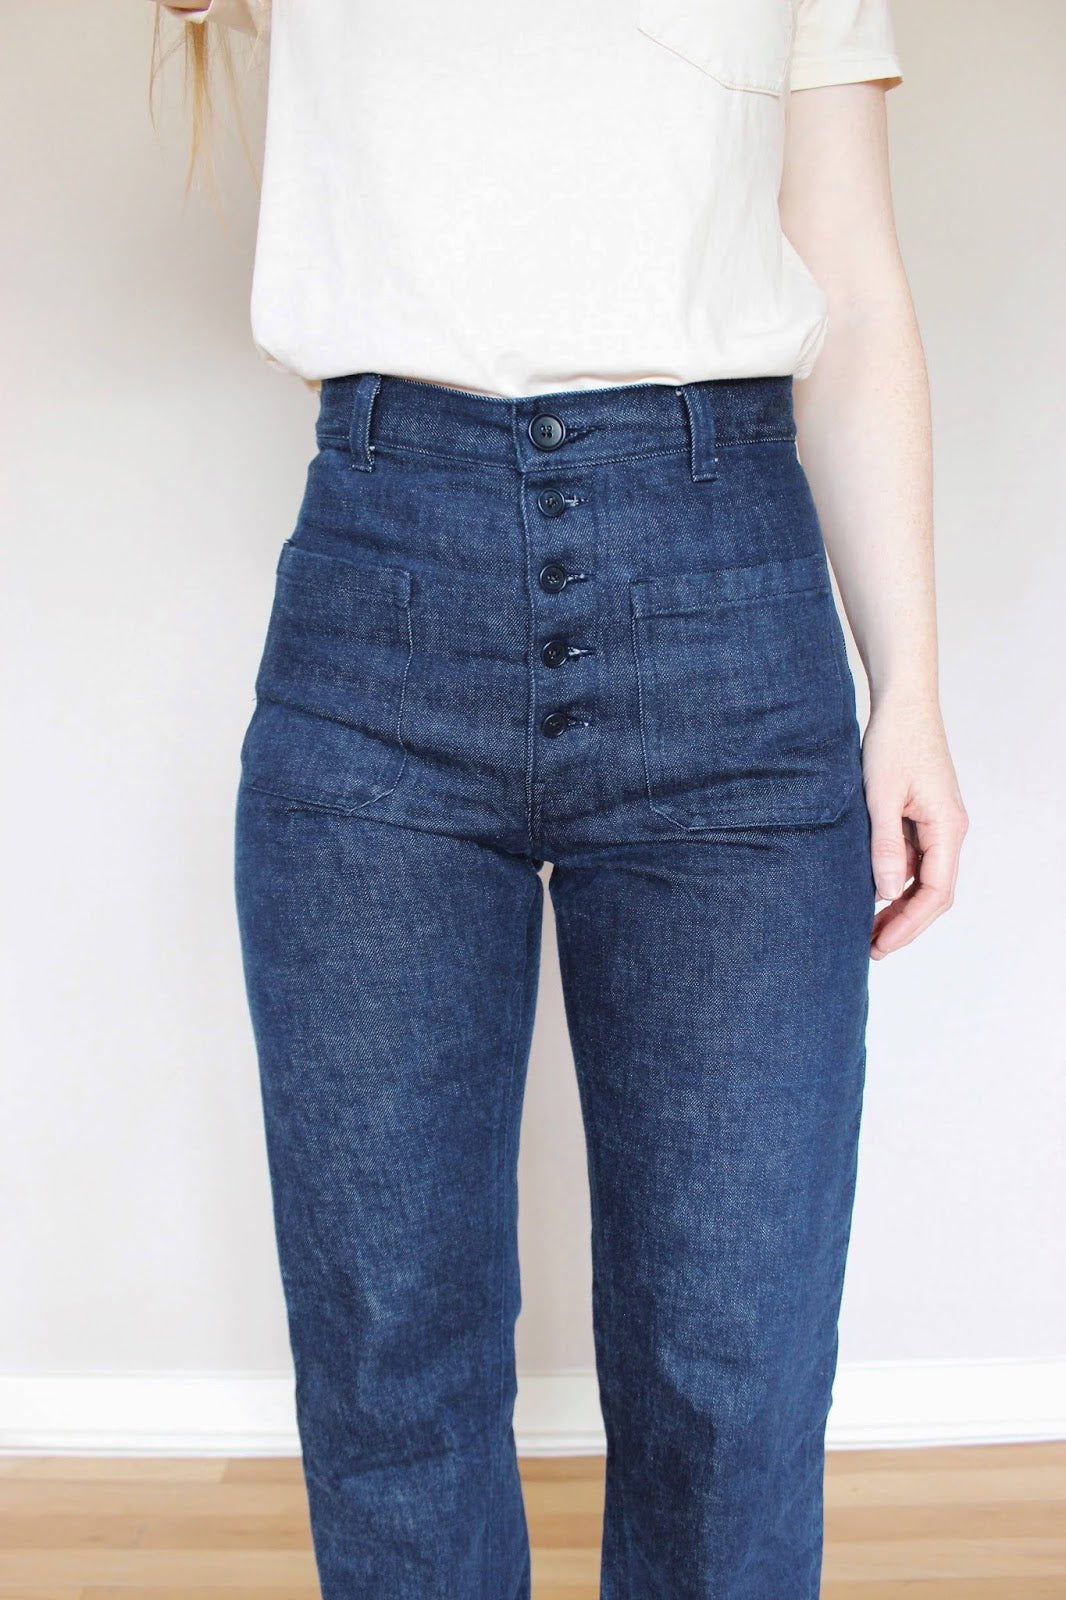 Women's pants patterns | Wardrobe By Me - We love sewing!